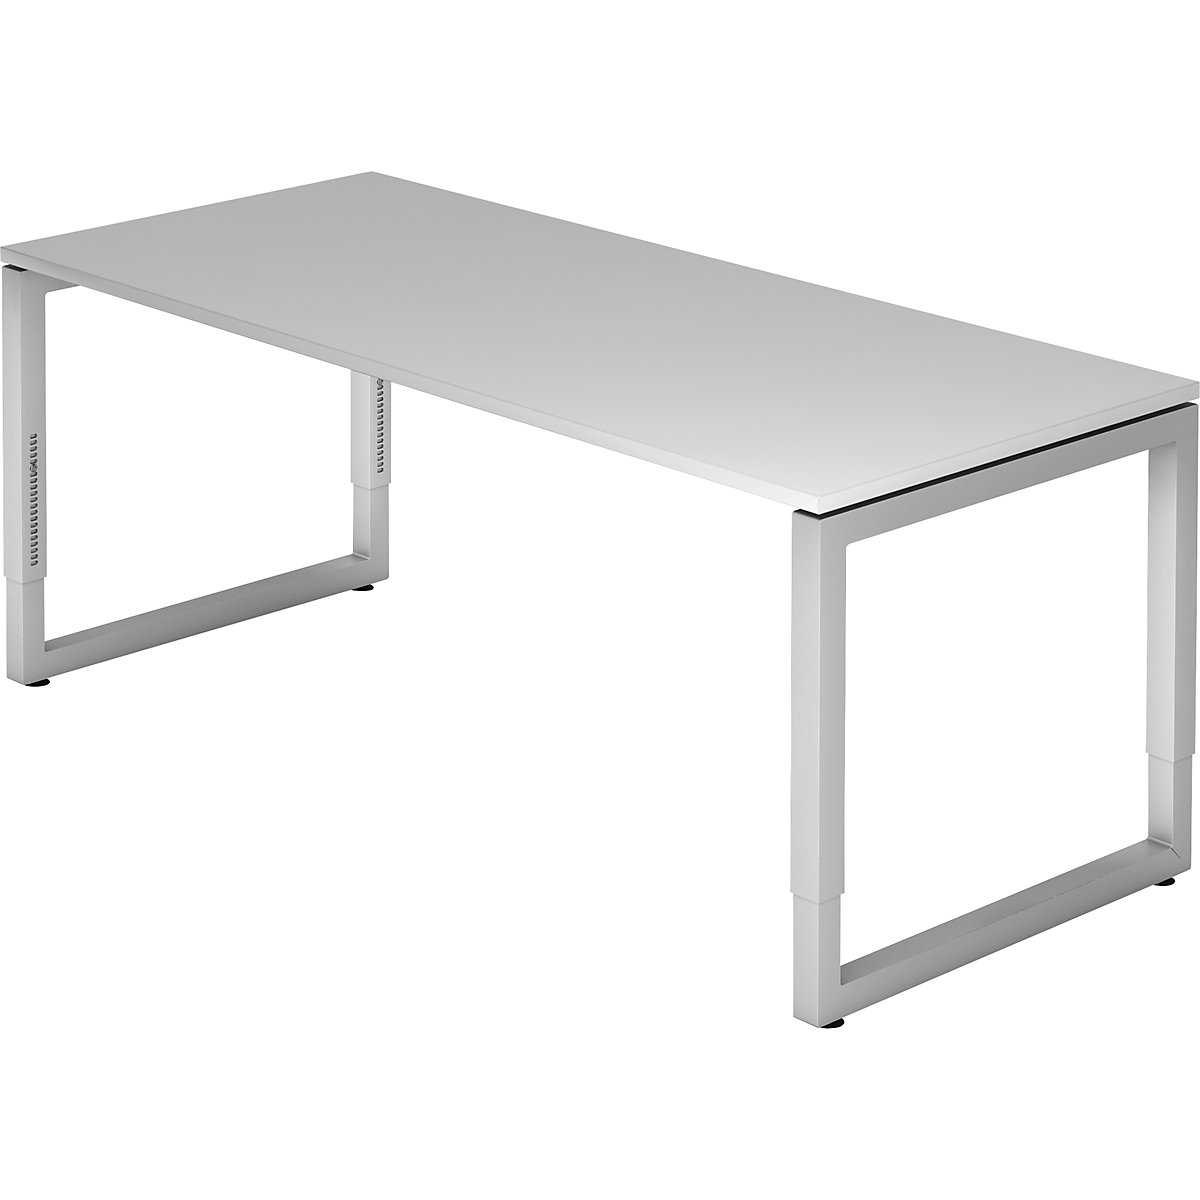 Desk with frame made of rectangular tubular steel ANNY – eurokraft pro, WxD 1800 x 800 mm, light grey-7